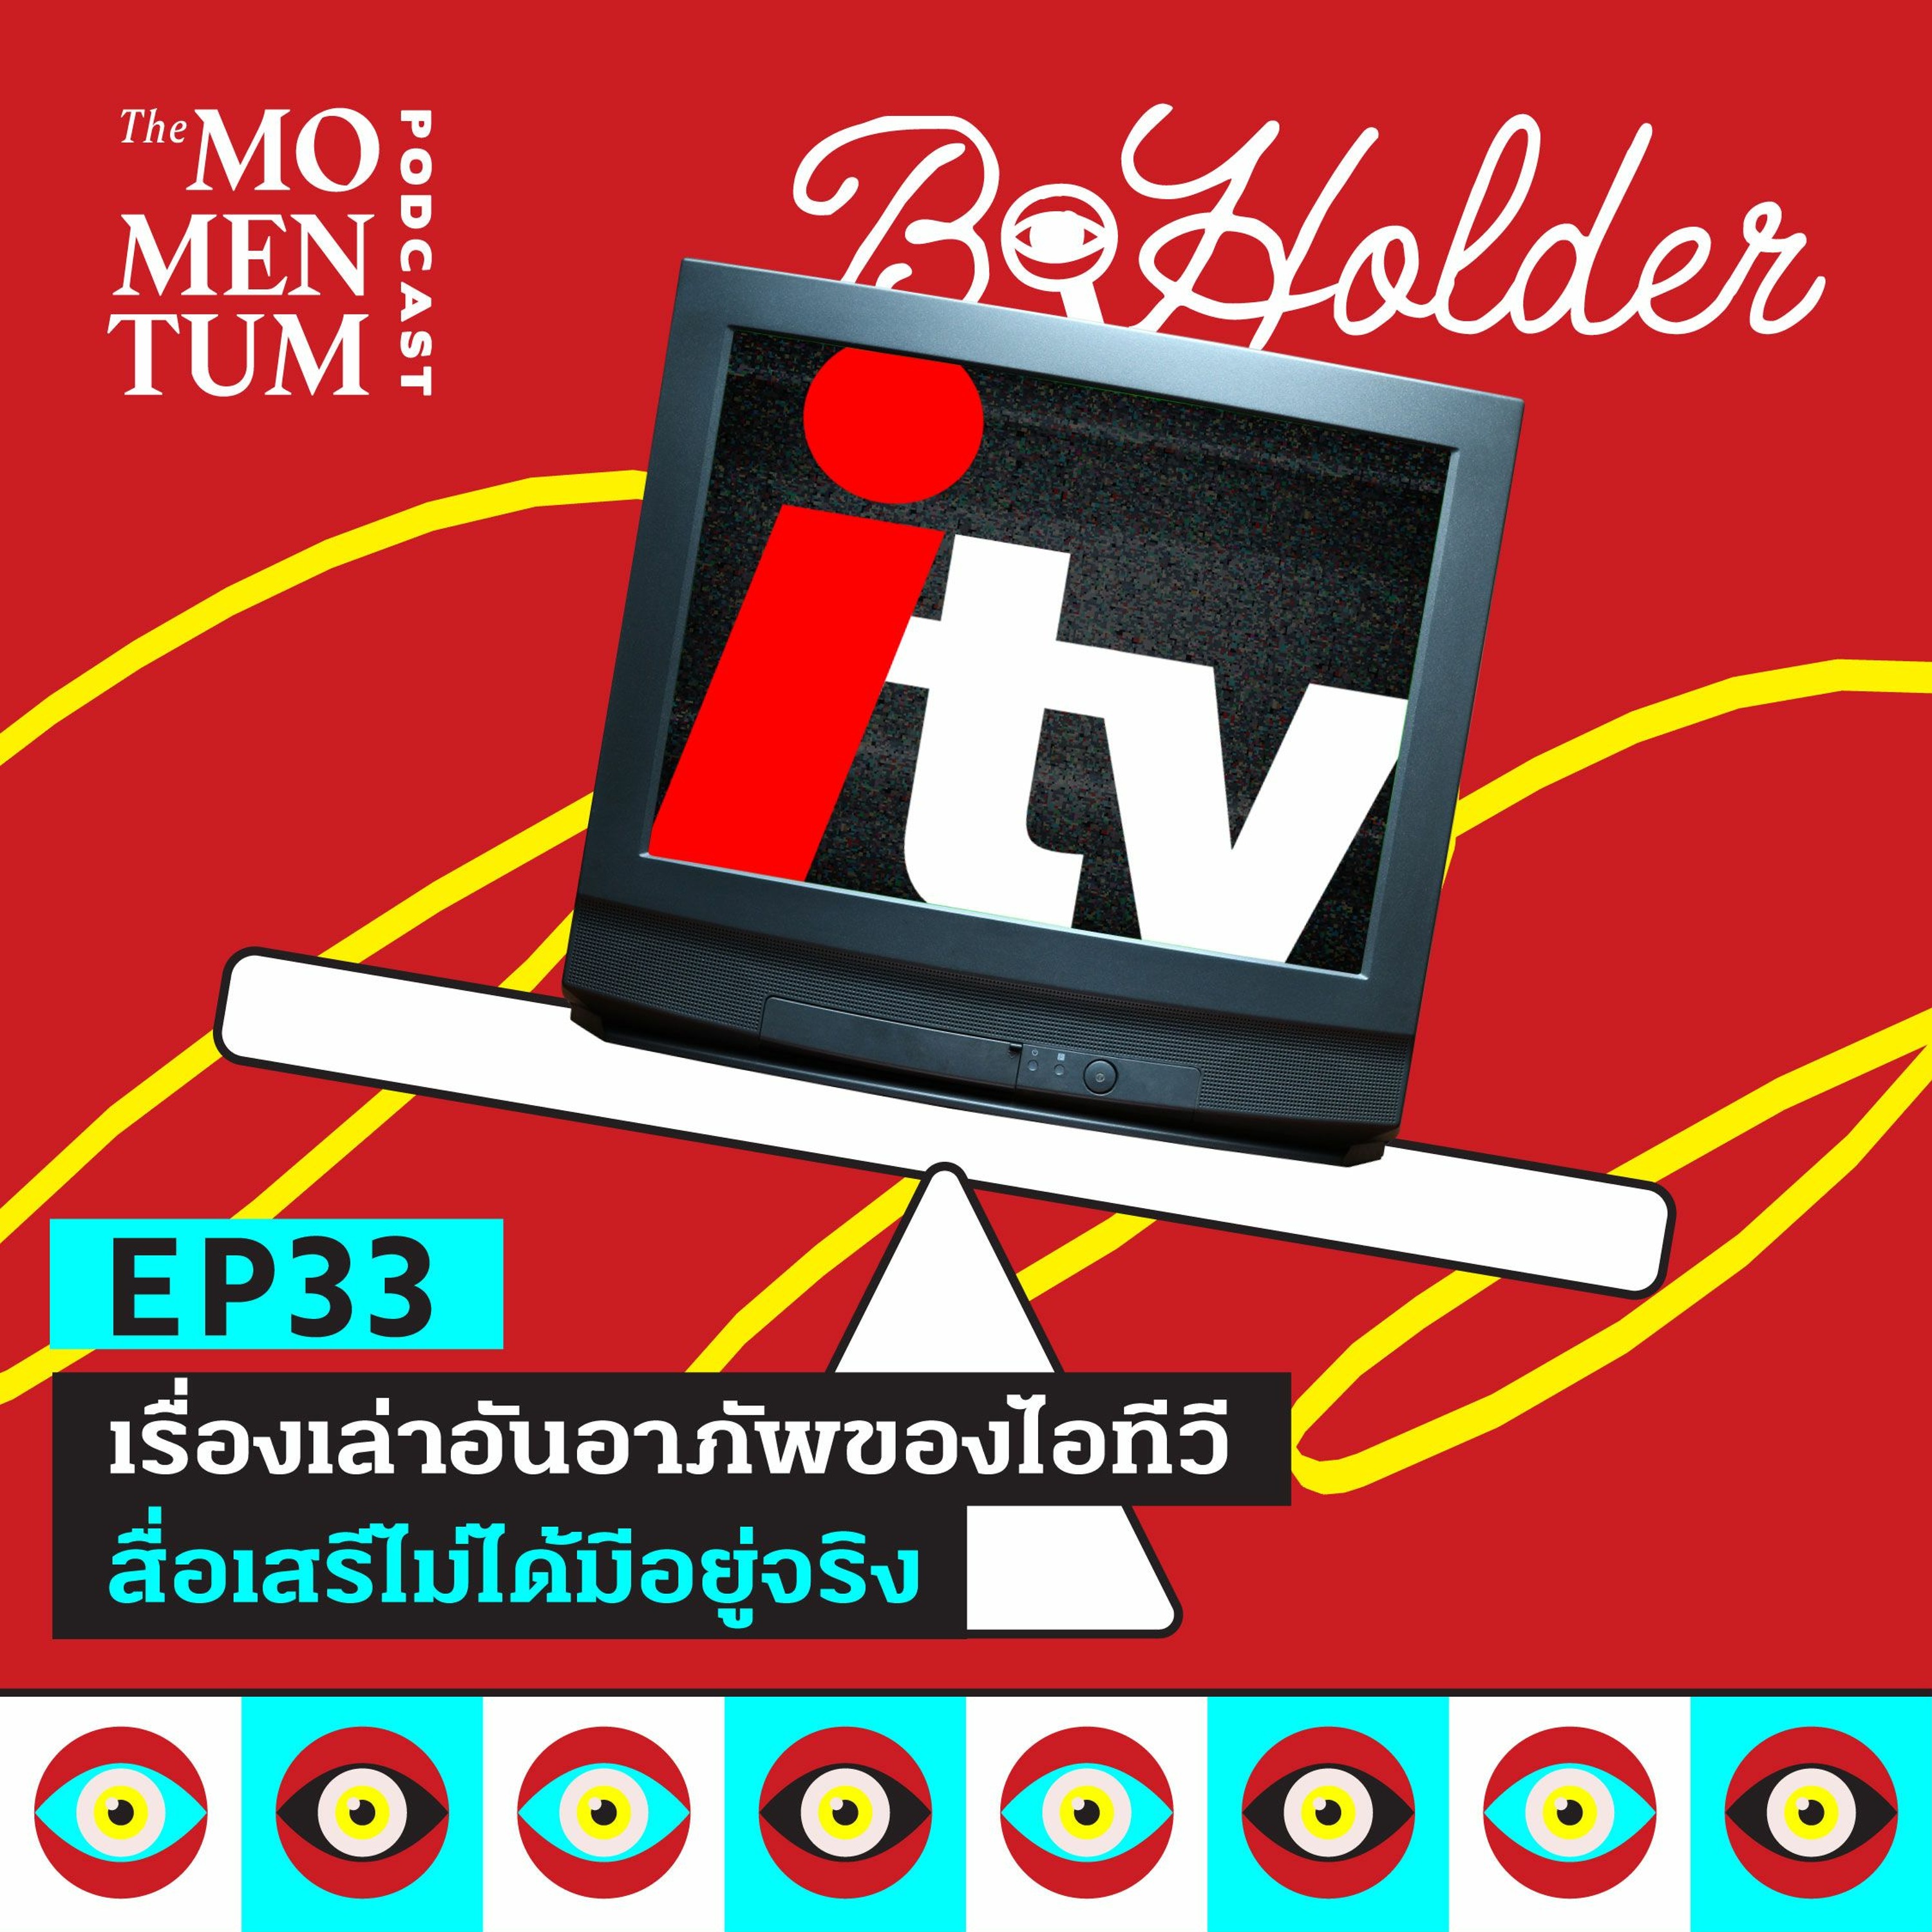 b-holder EP33: เรื่องเล่าอันอาภัพของไอทีวี สื่อเสรีที่ไม่ได้มีอยู่จริง